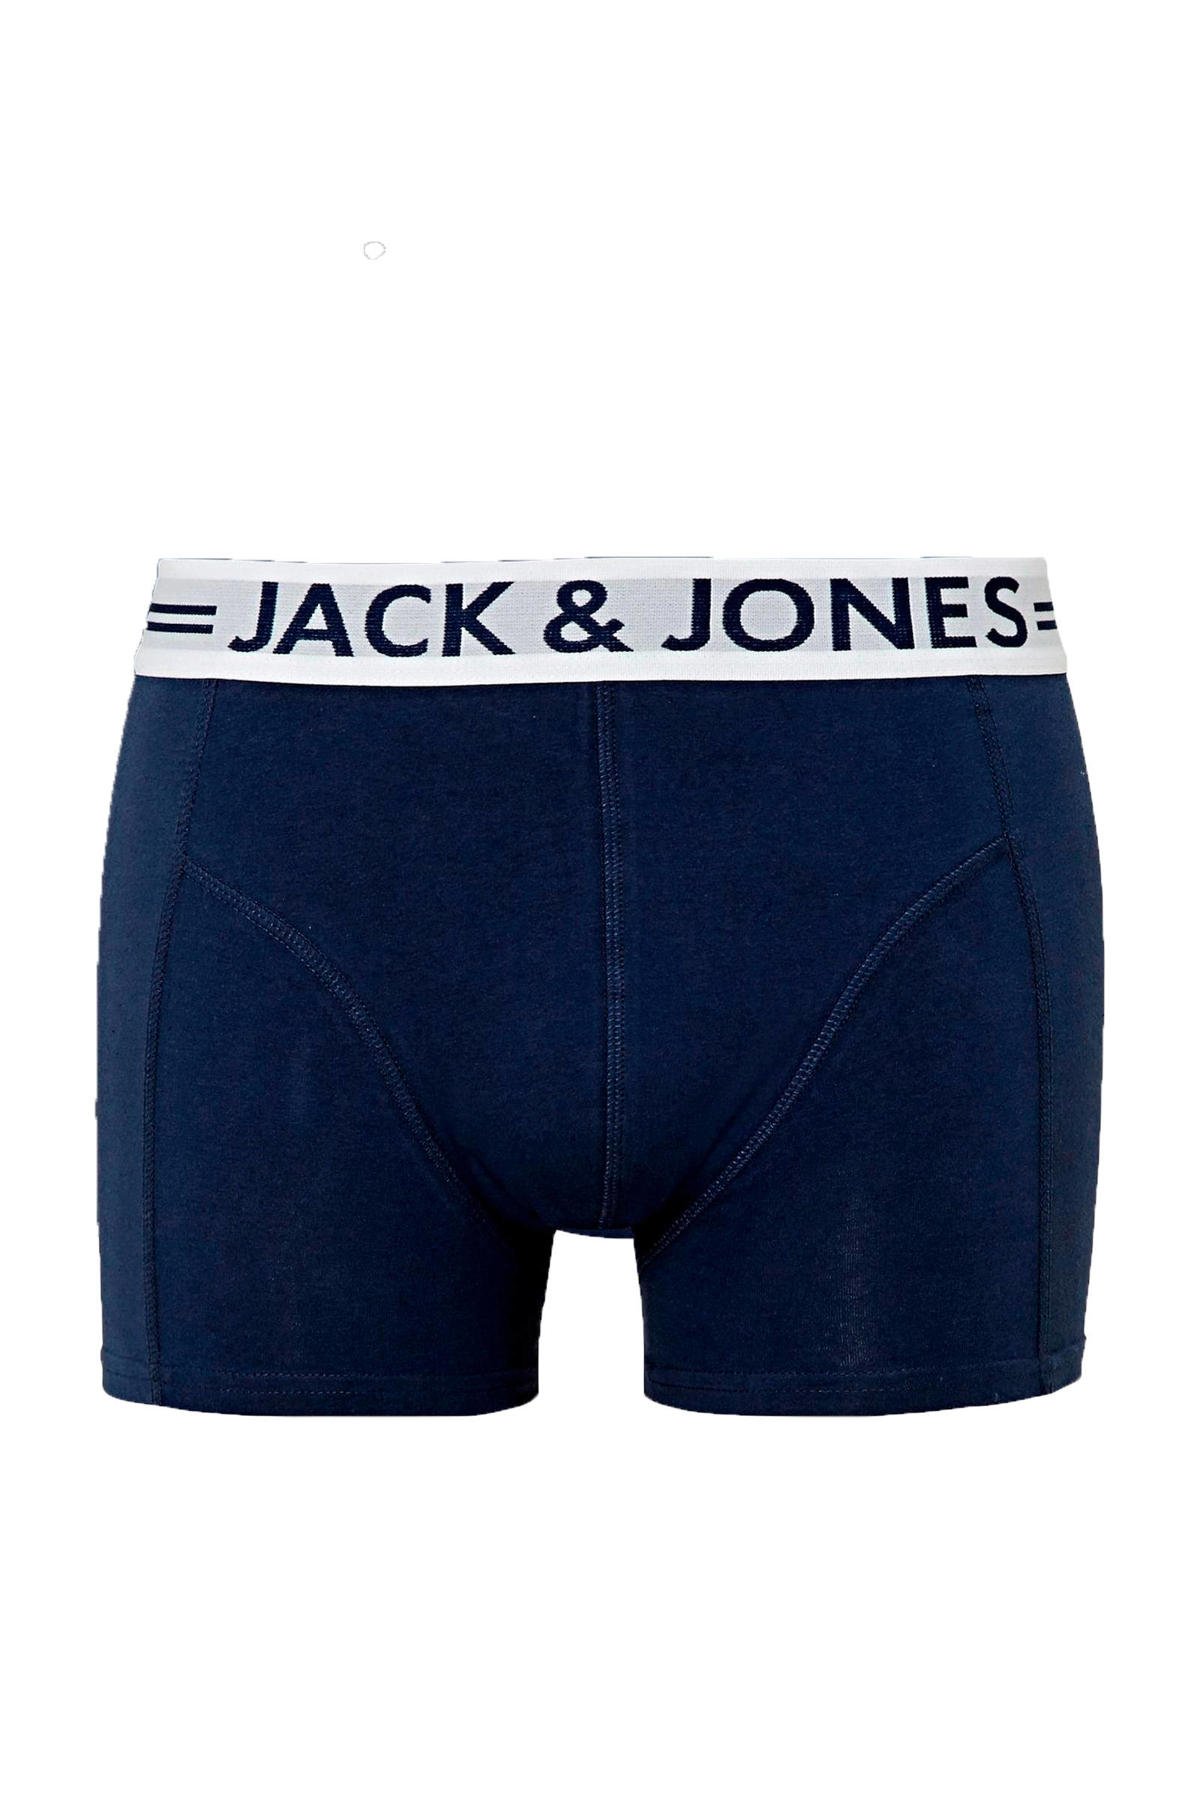 JACK & boxershort JACSENSE donkerblauw | wehkamp